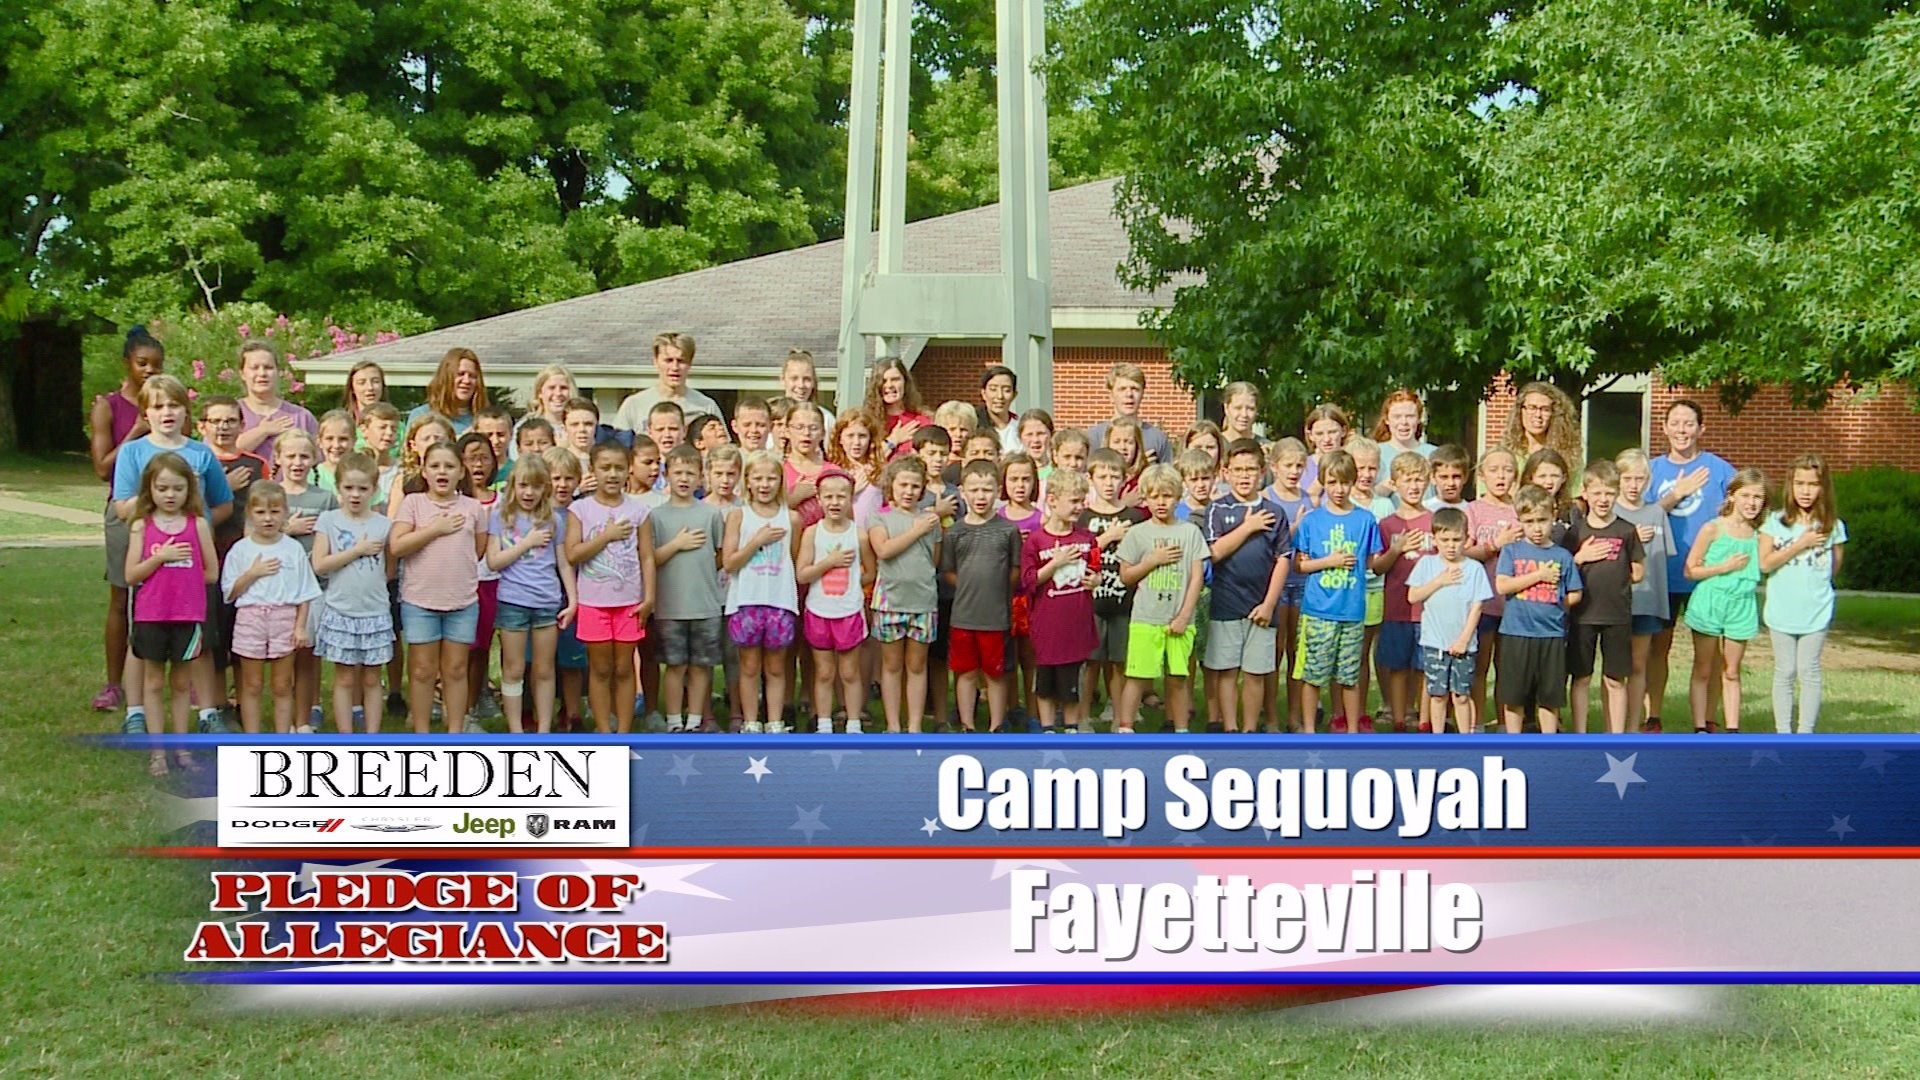 Camp Sequoyah in Fayetteville